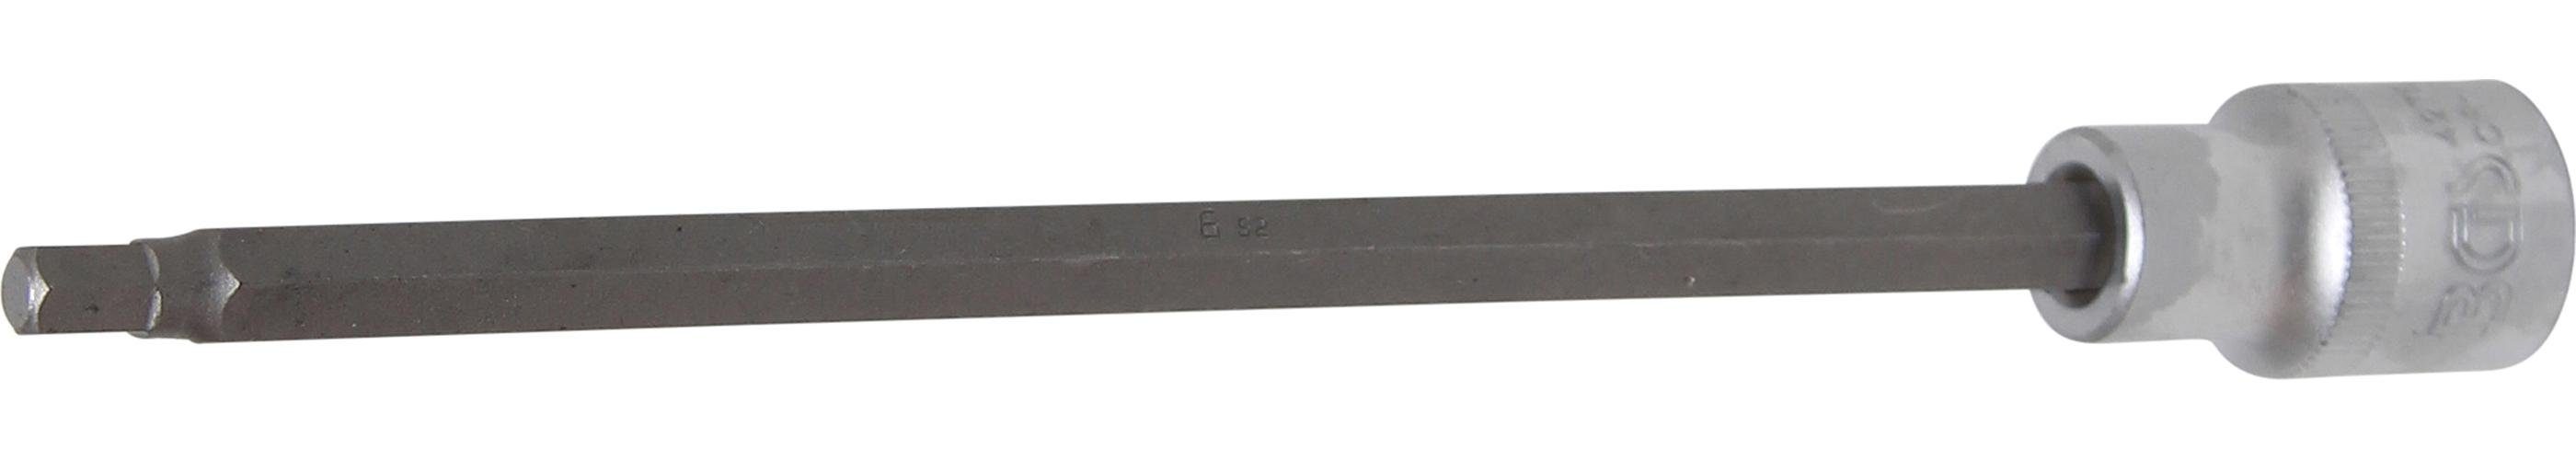 BGS technic Sechskant-Bit Bit-Einsatz, Länge 200 mm, Antrieb Innenvierkant 12,5 mm (1/2), Innensechskant 6 mm